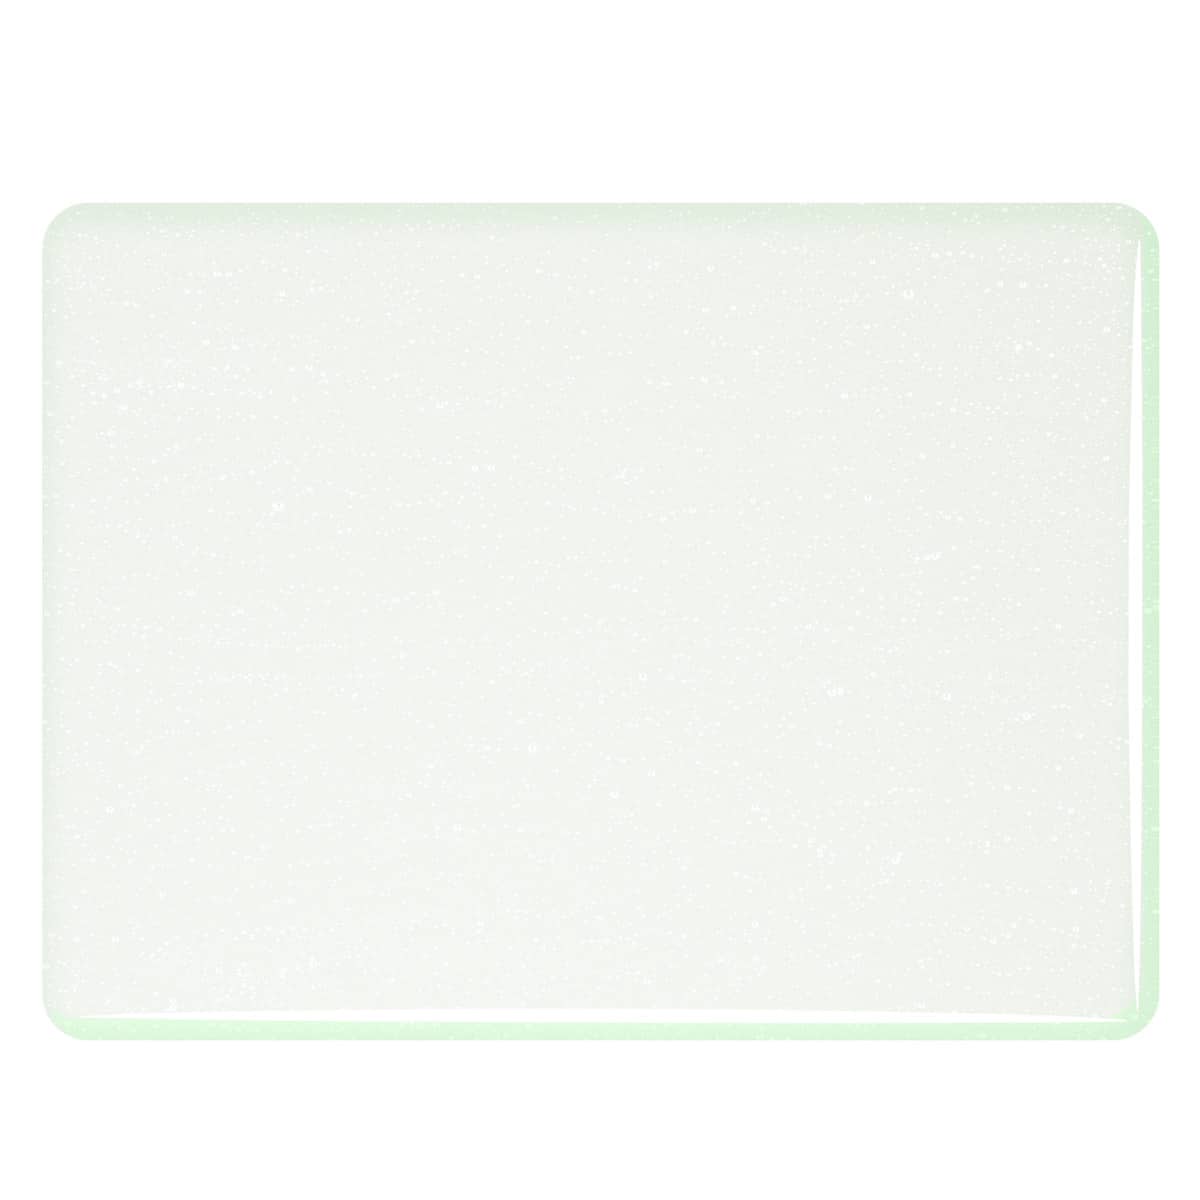 001917 Cilantro Green Tint transparent sheet glass swatch